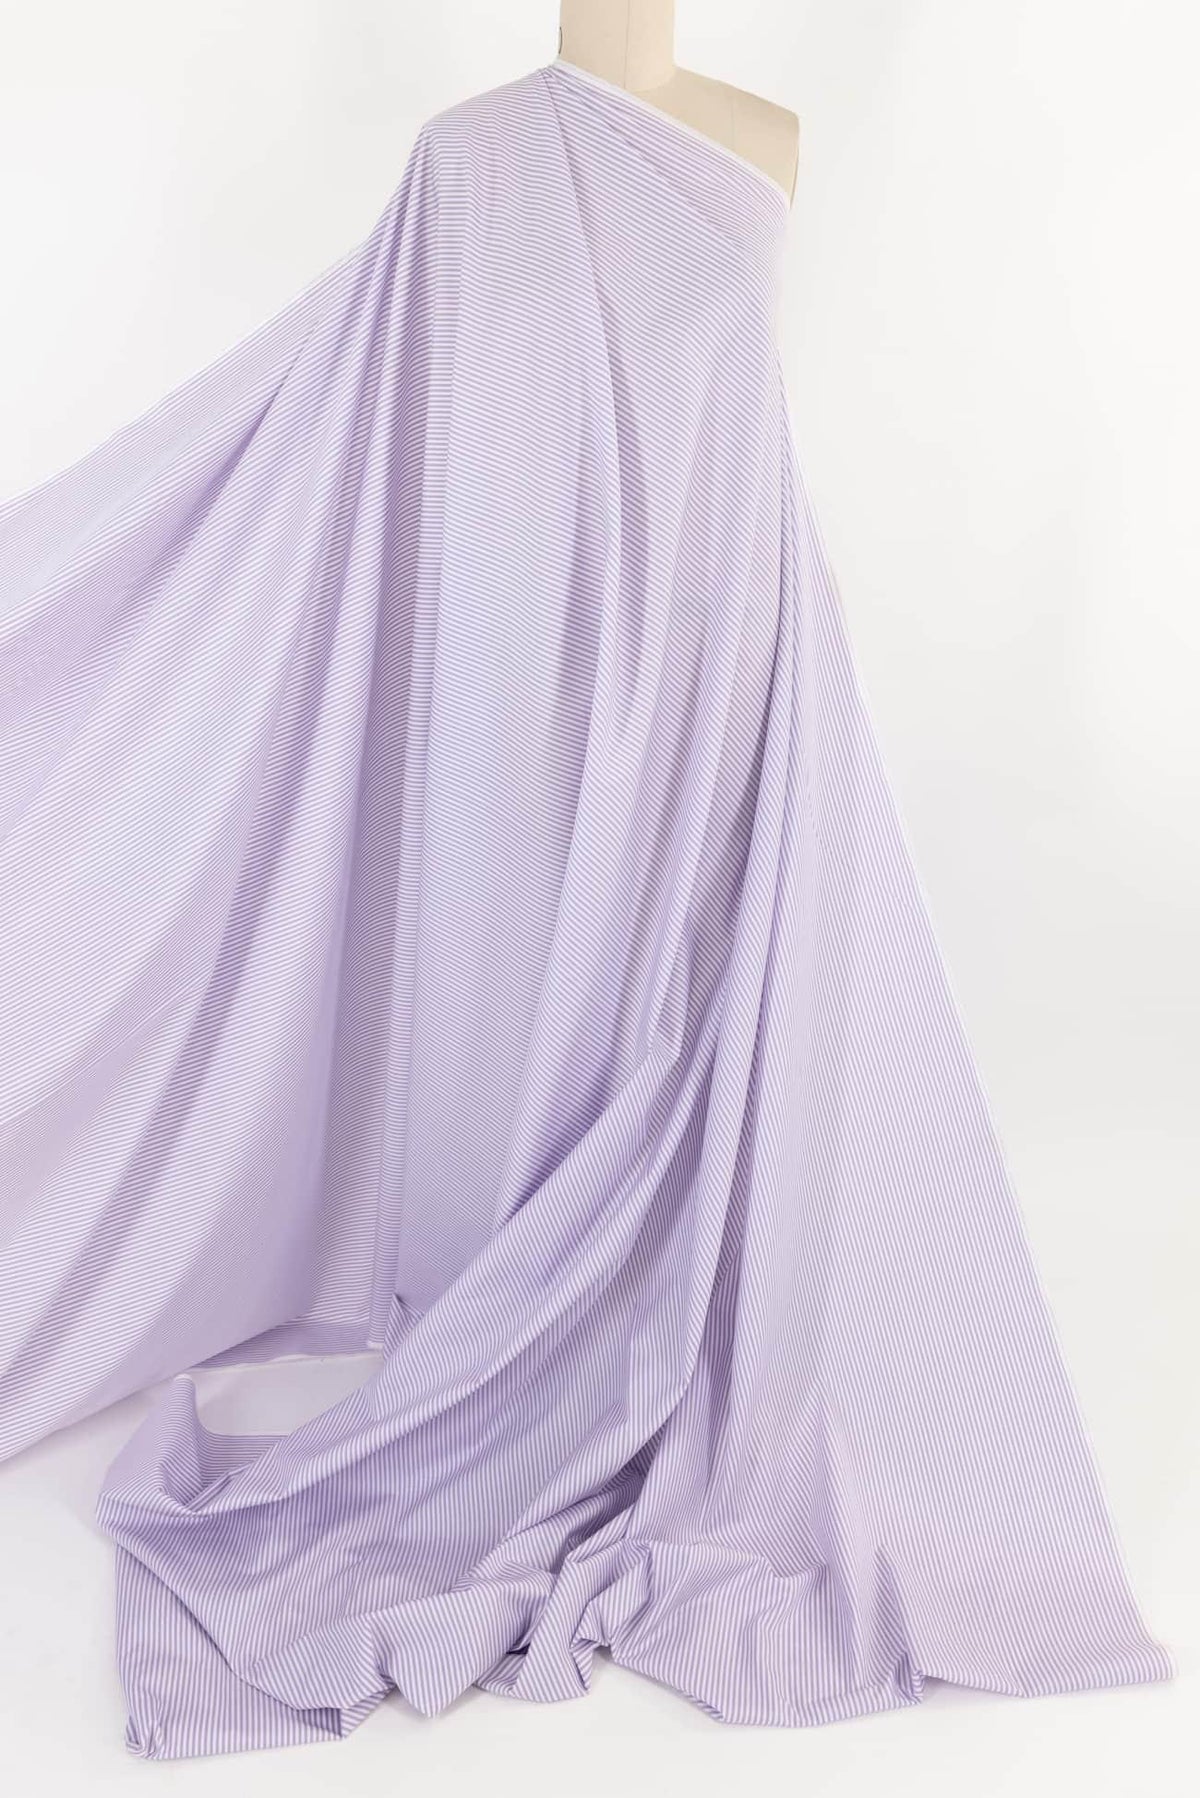 French Lavender Italian Cotton Woven - Marcy Tilton Fabrics